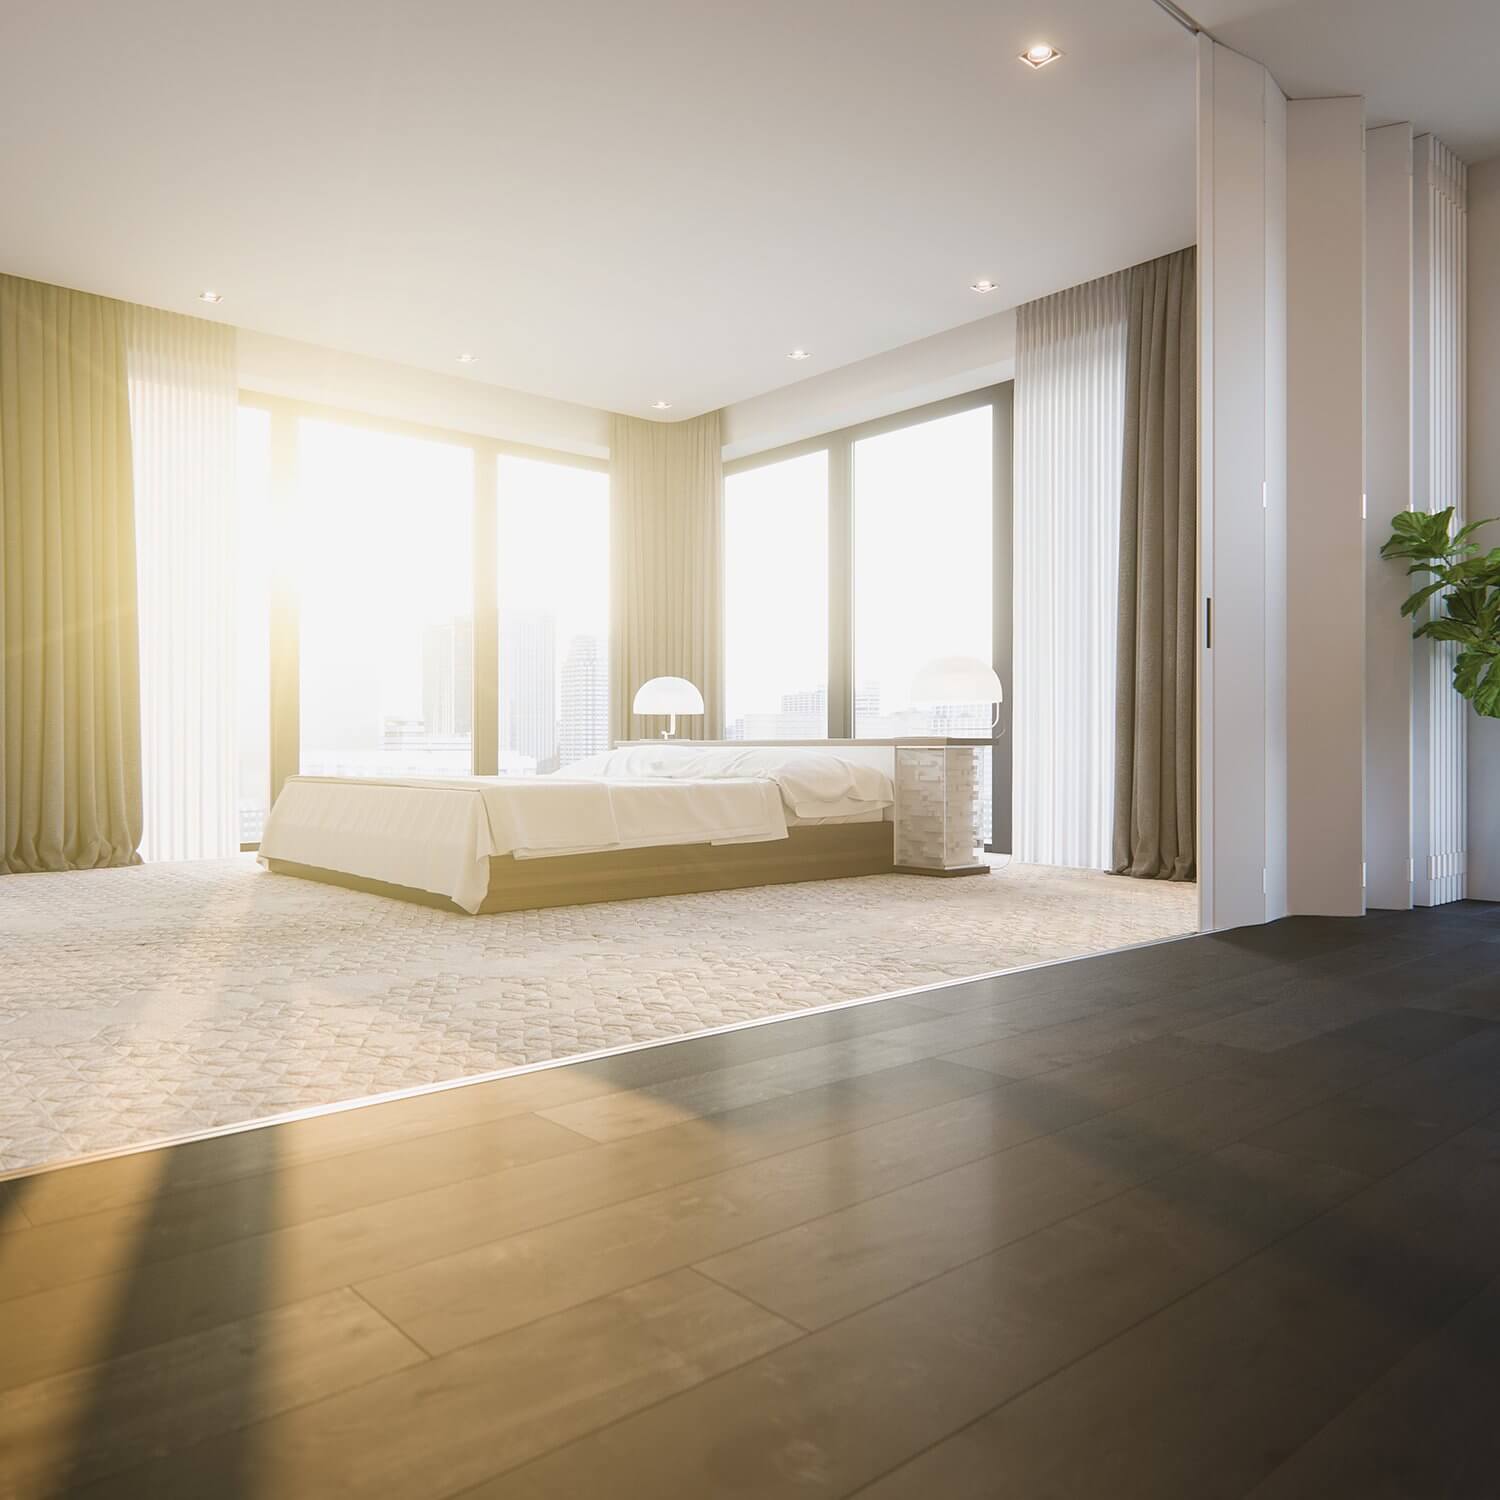 Black house penthouse bedroom sunlight - cgi visualization